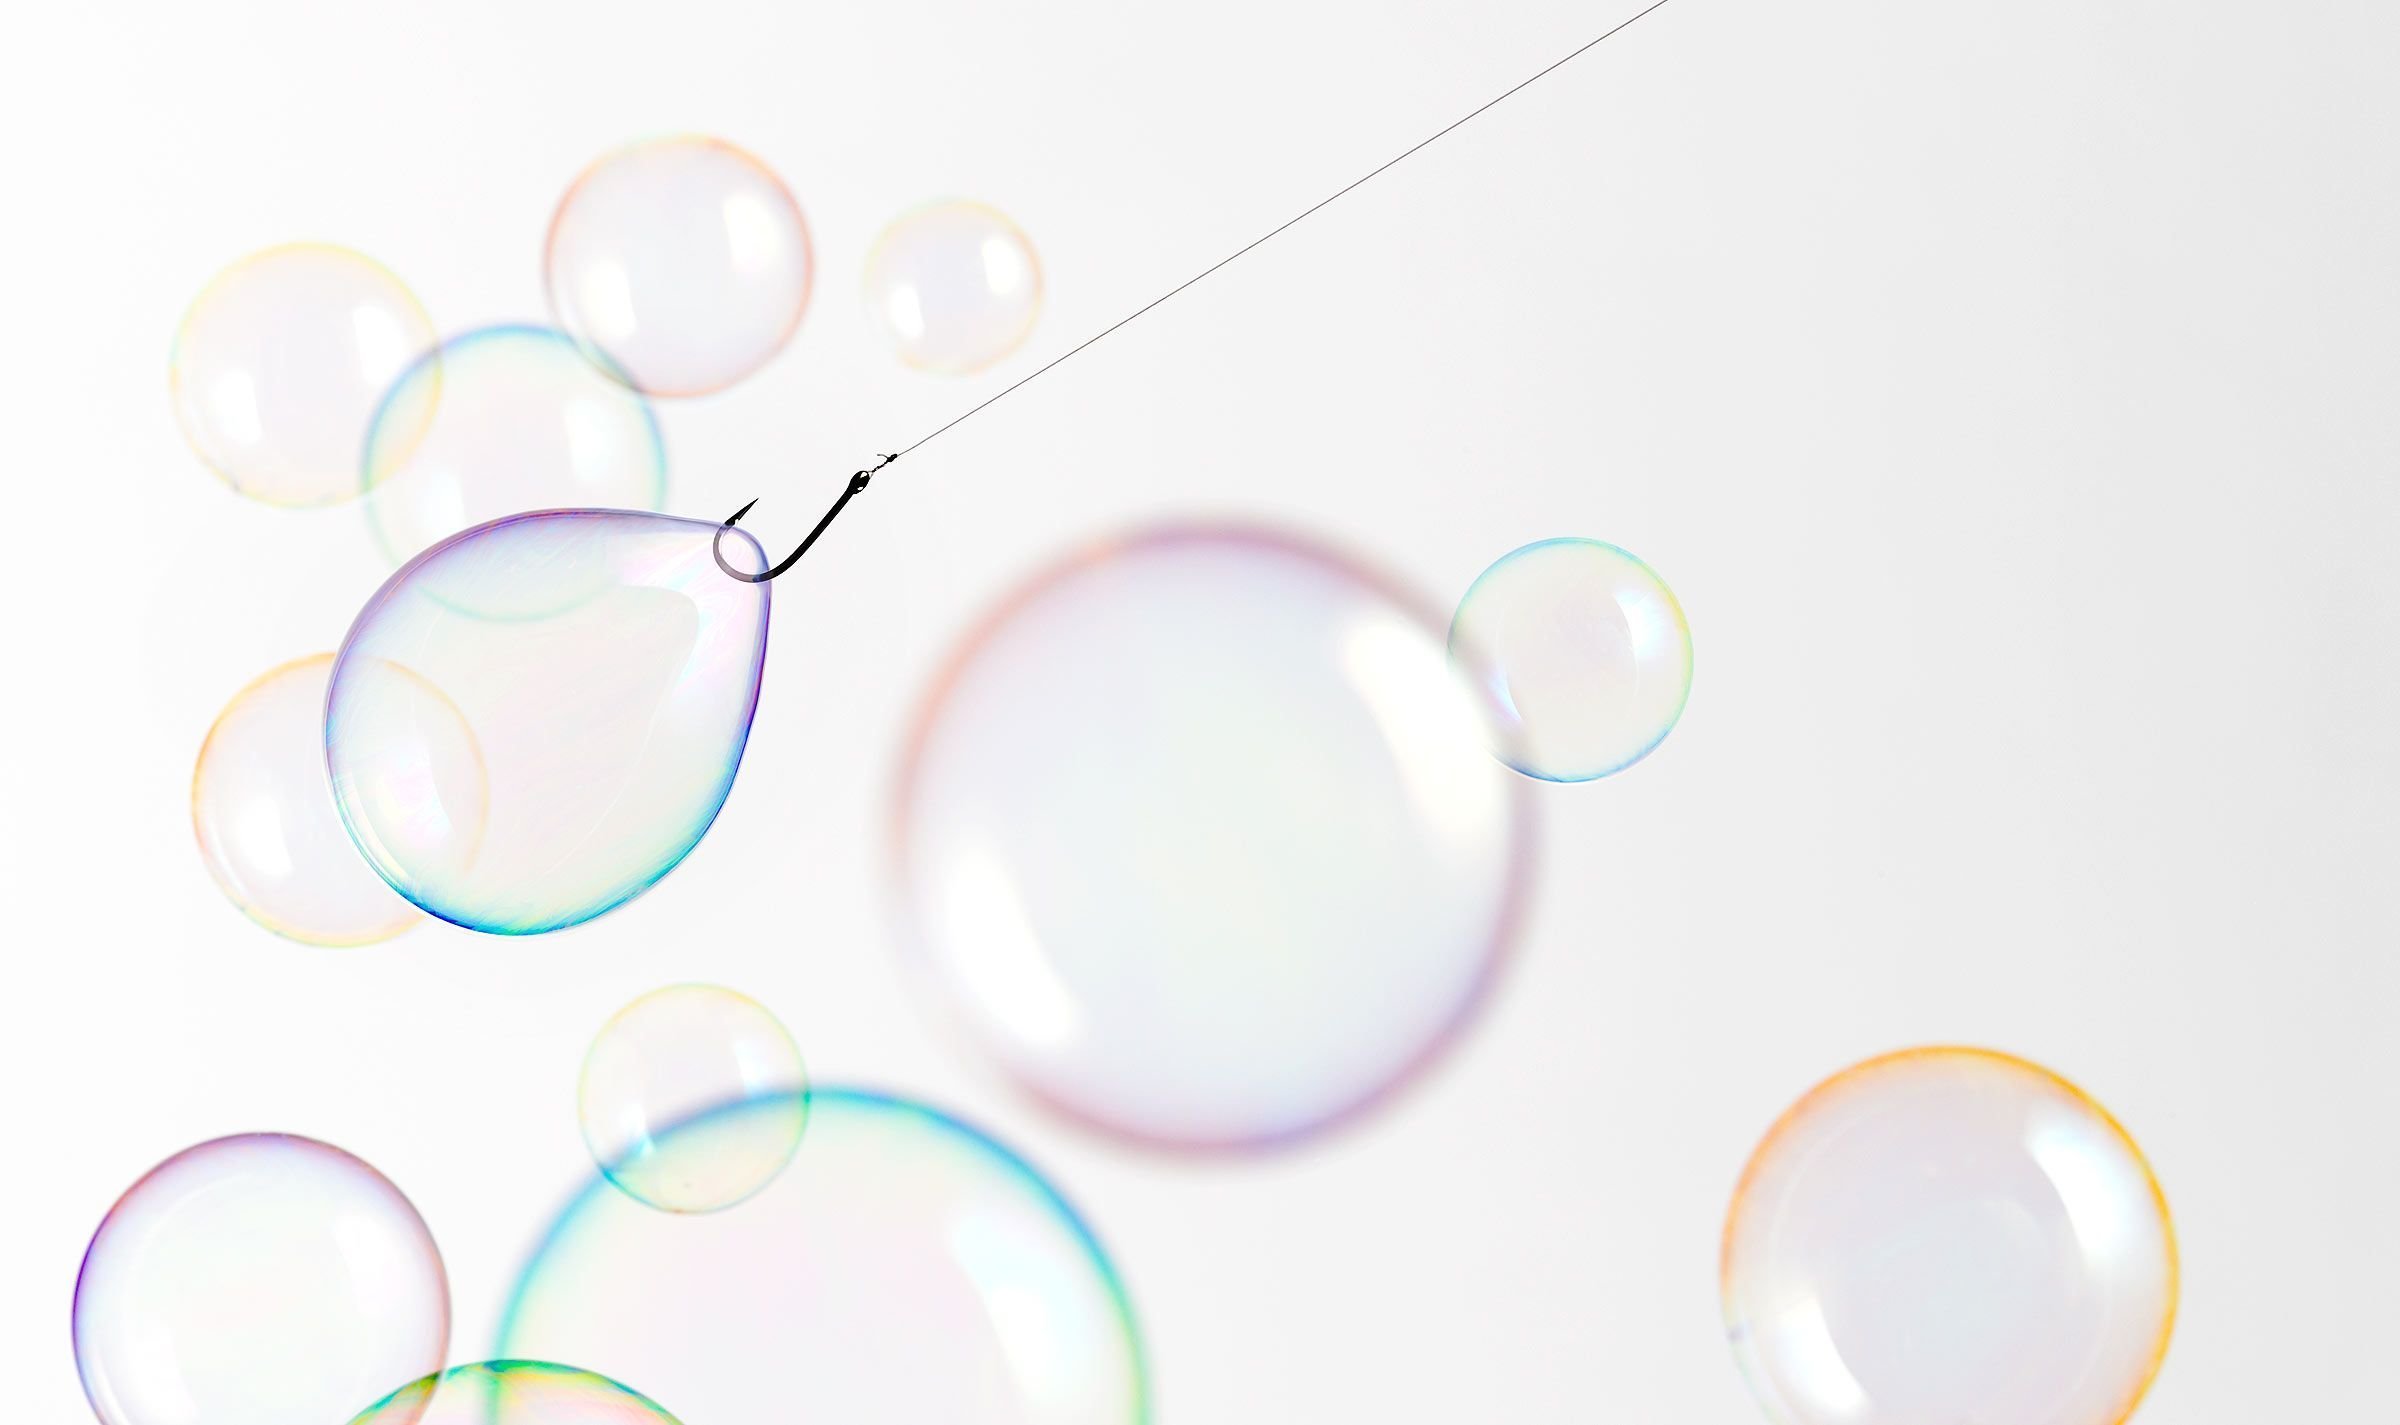 Покажи картинку пузыри. Фон пузыри. Фон мыльные пузыри. Пузыри на прозрачном фоне. Мыльные пузыри на белом фоне.